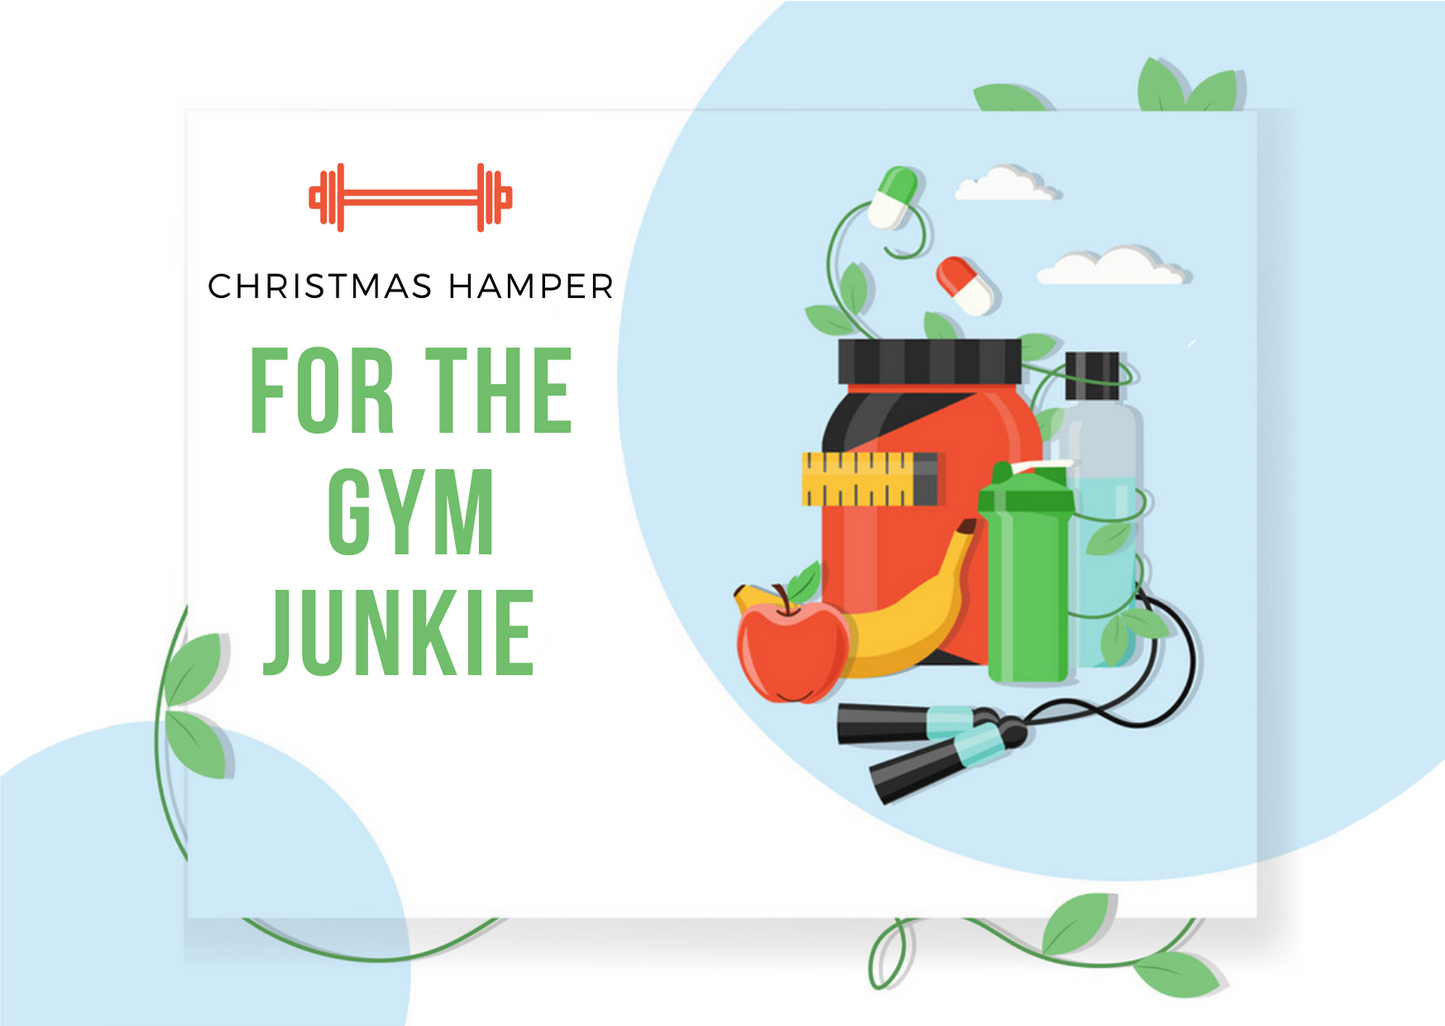 Christmas Hamper For the Gym Junkie